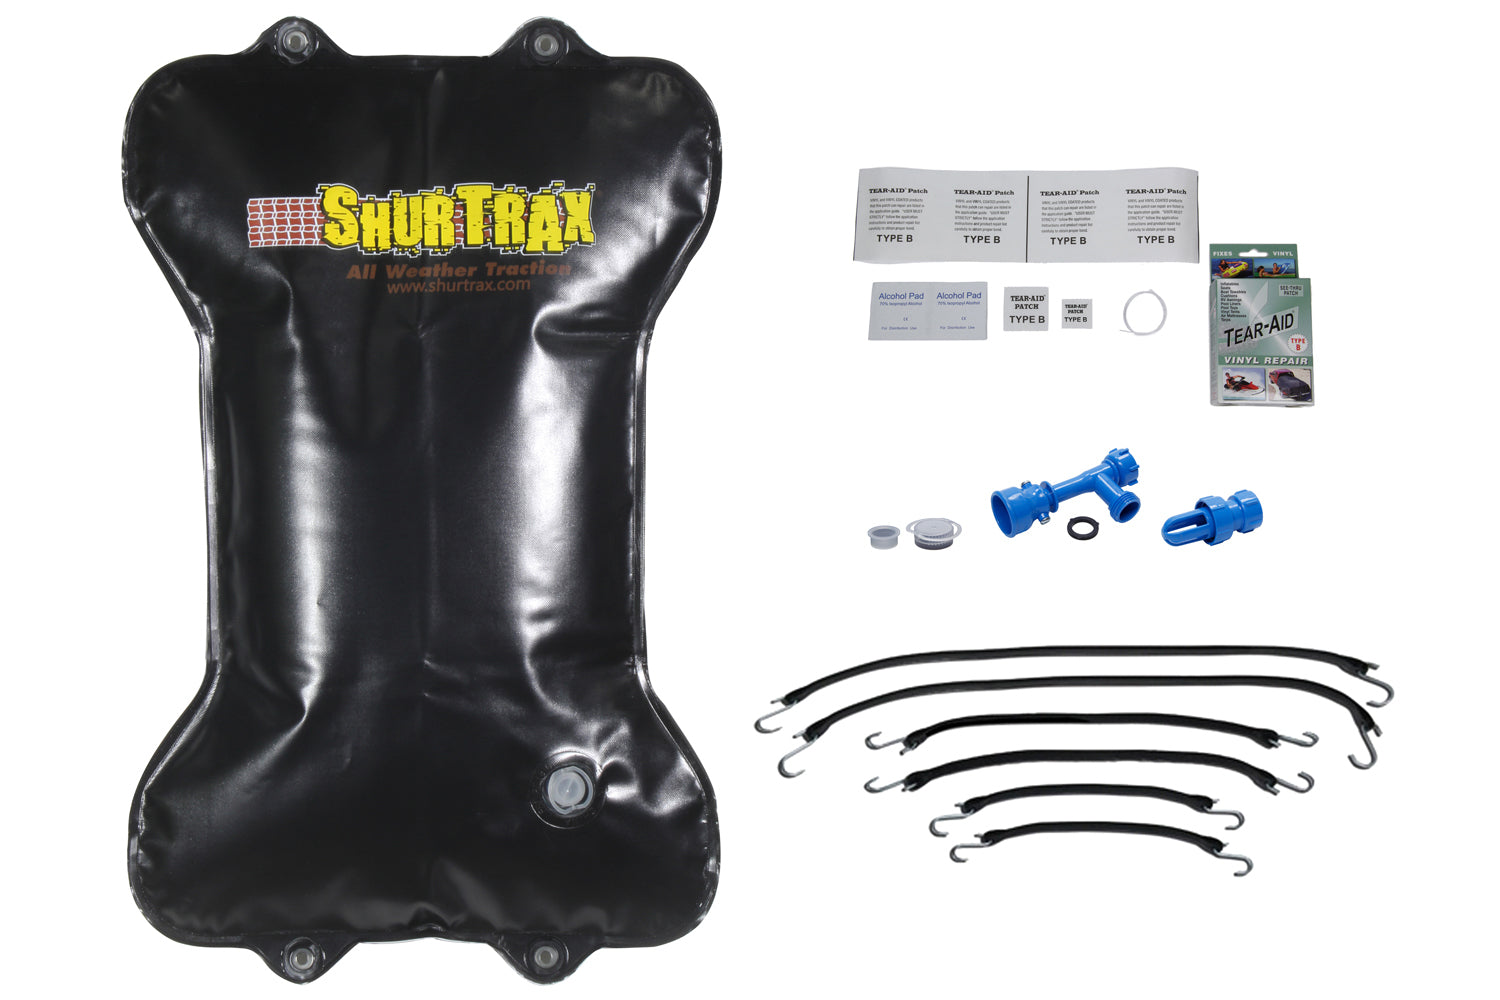 Shurtrax Auto/Suv Size Traction Aid w/Repair Kit SHU20036